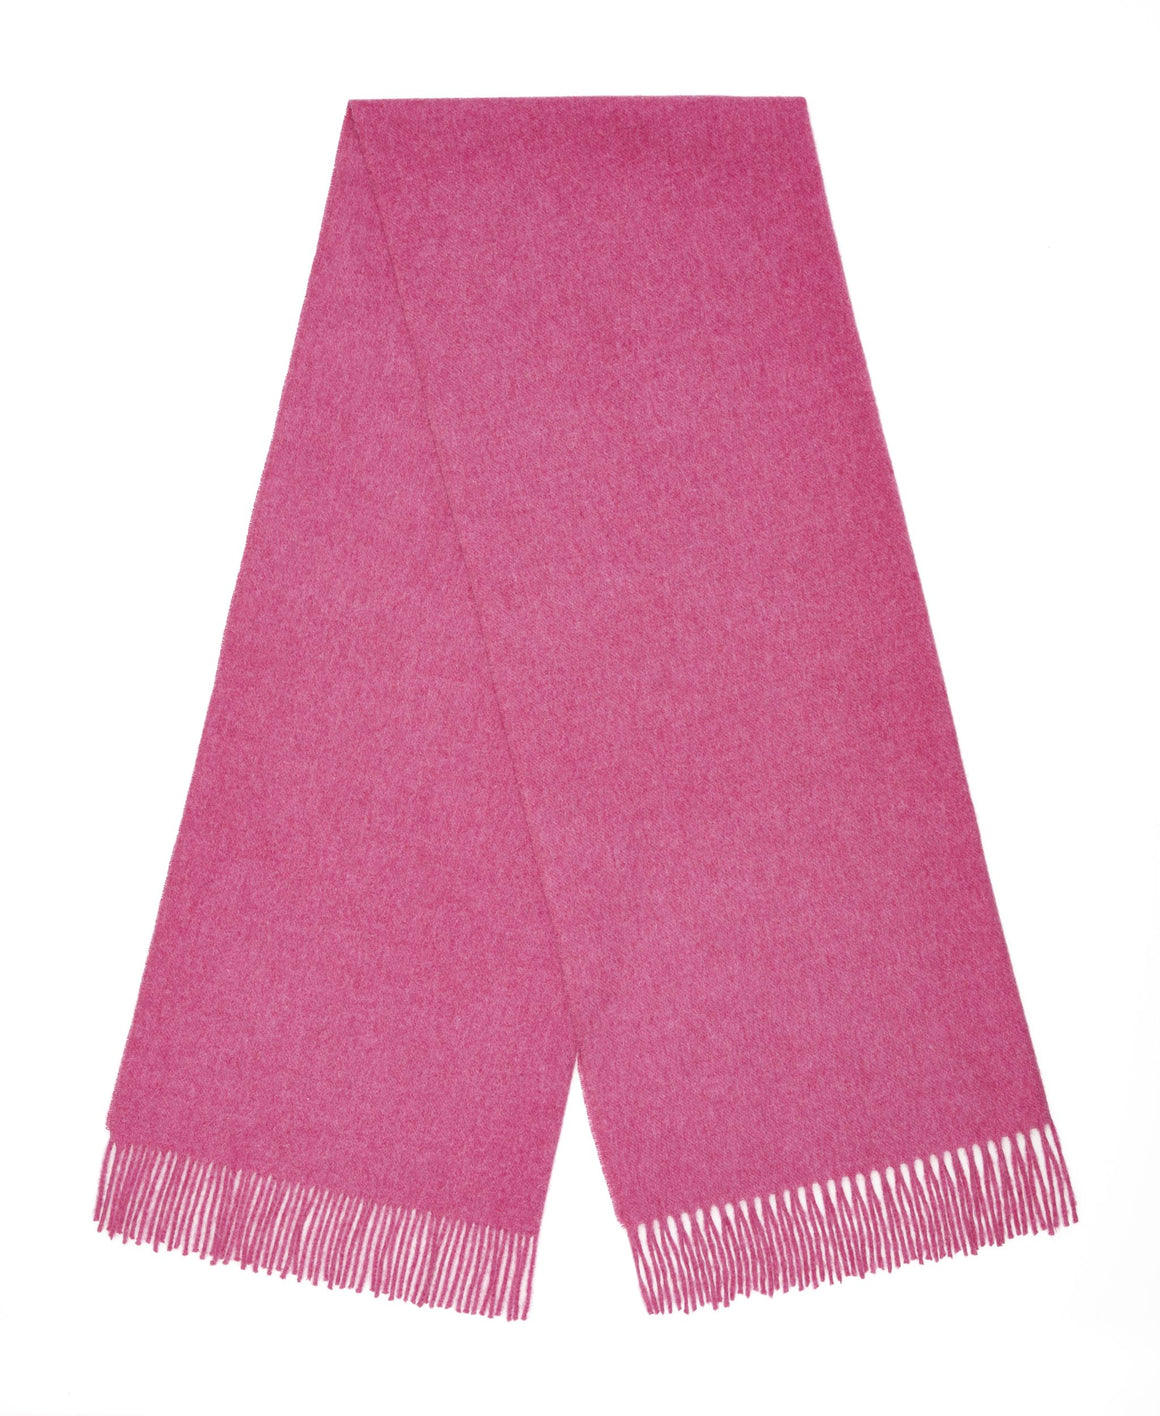 Blanket Scarf - Shawl - Stole - Wrap - Plain Pink